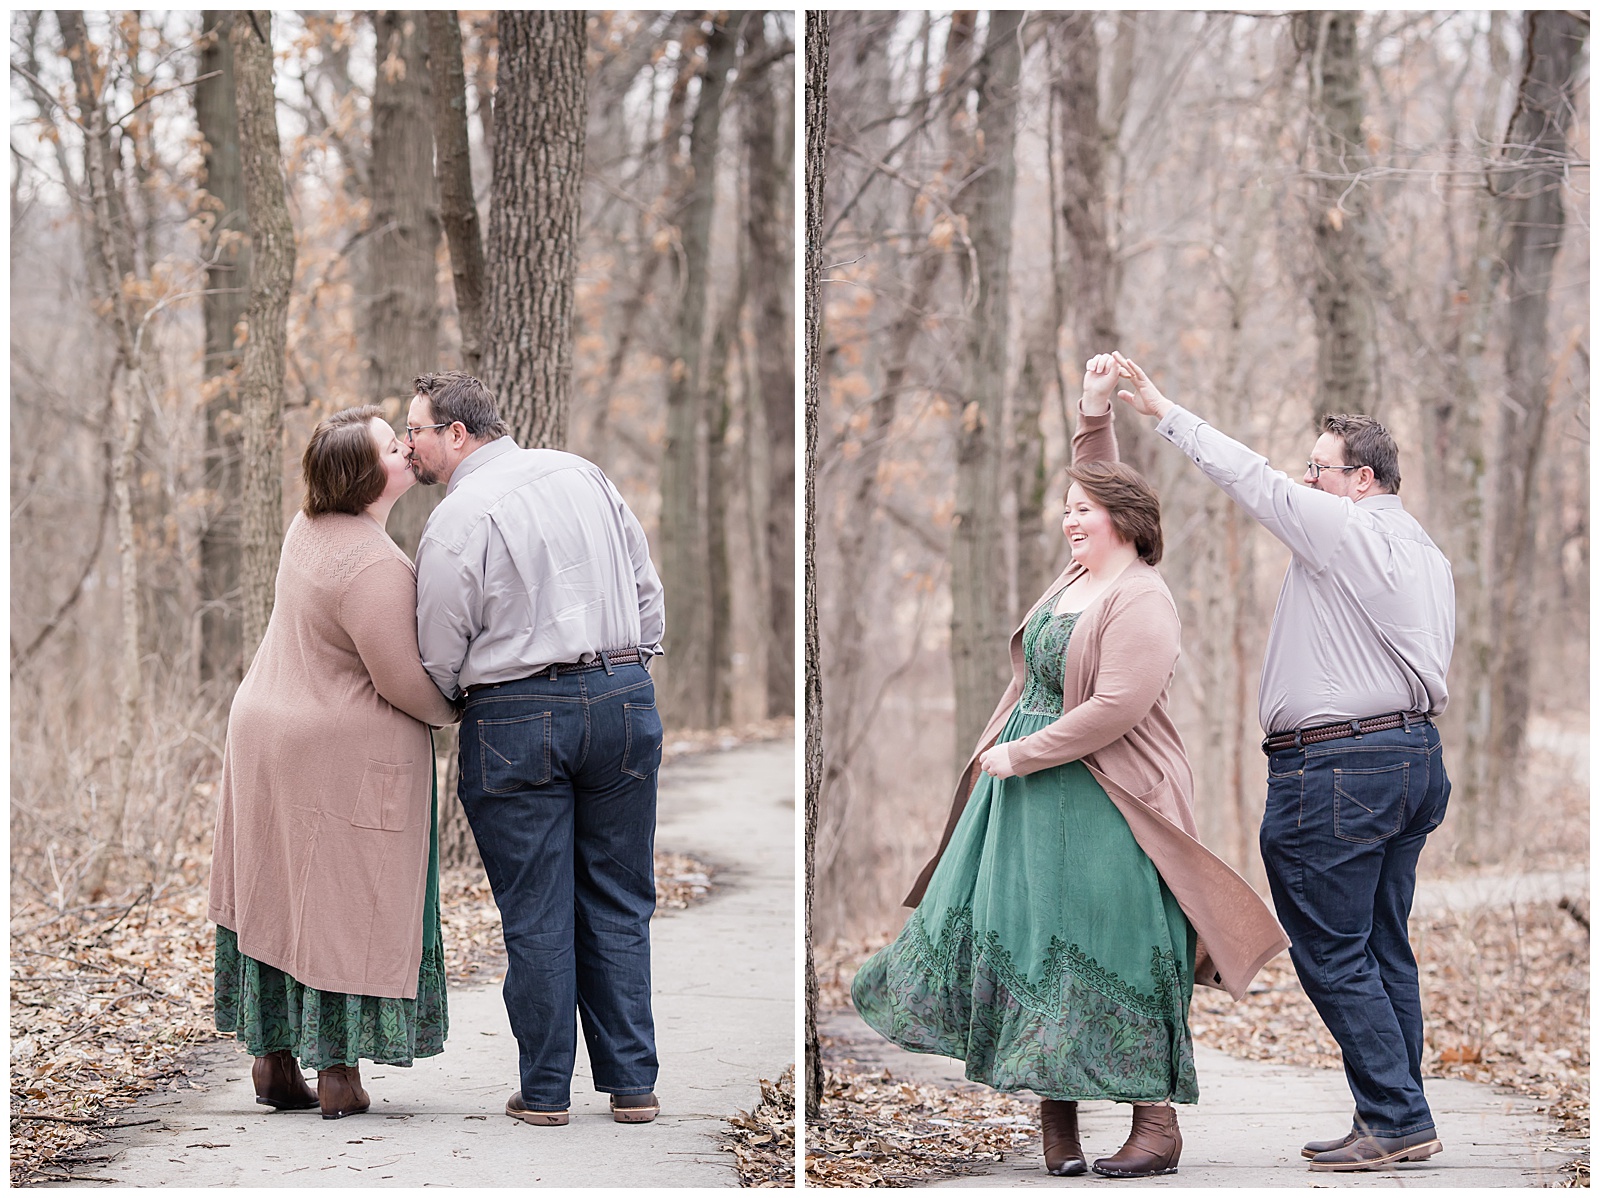 Engagement photography at Burr Oak Woods Conservation Area by Kansas City wedding photographers Wisdom-Watson Weddings.